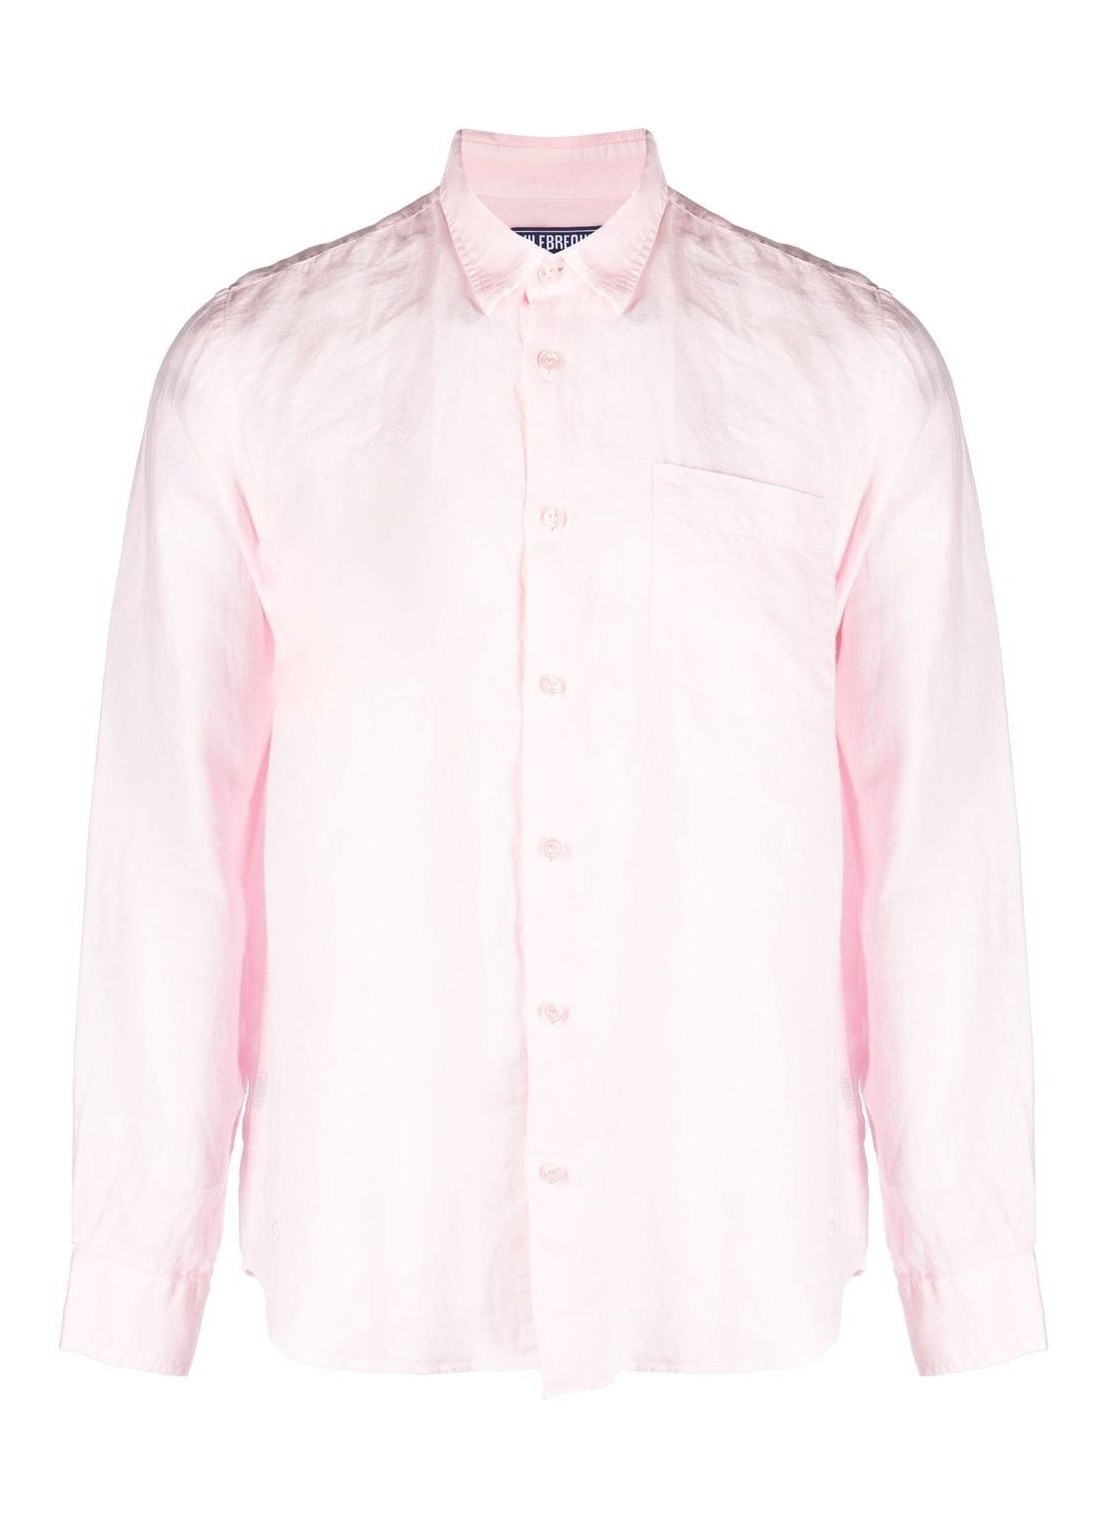 Camiseria vilebrequin shirt man caroubish9u10 crsh9u10 263 talla rosa
 